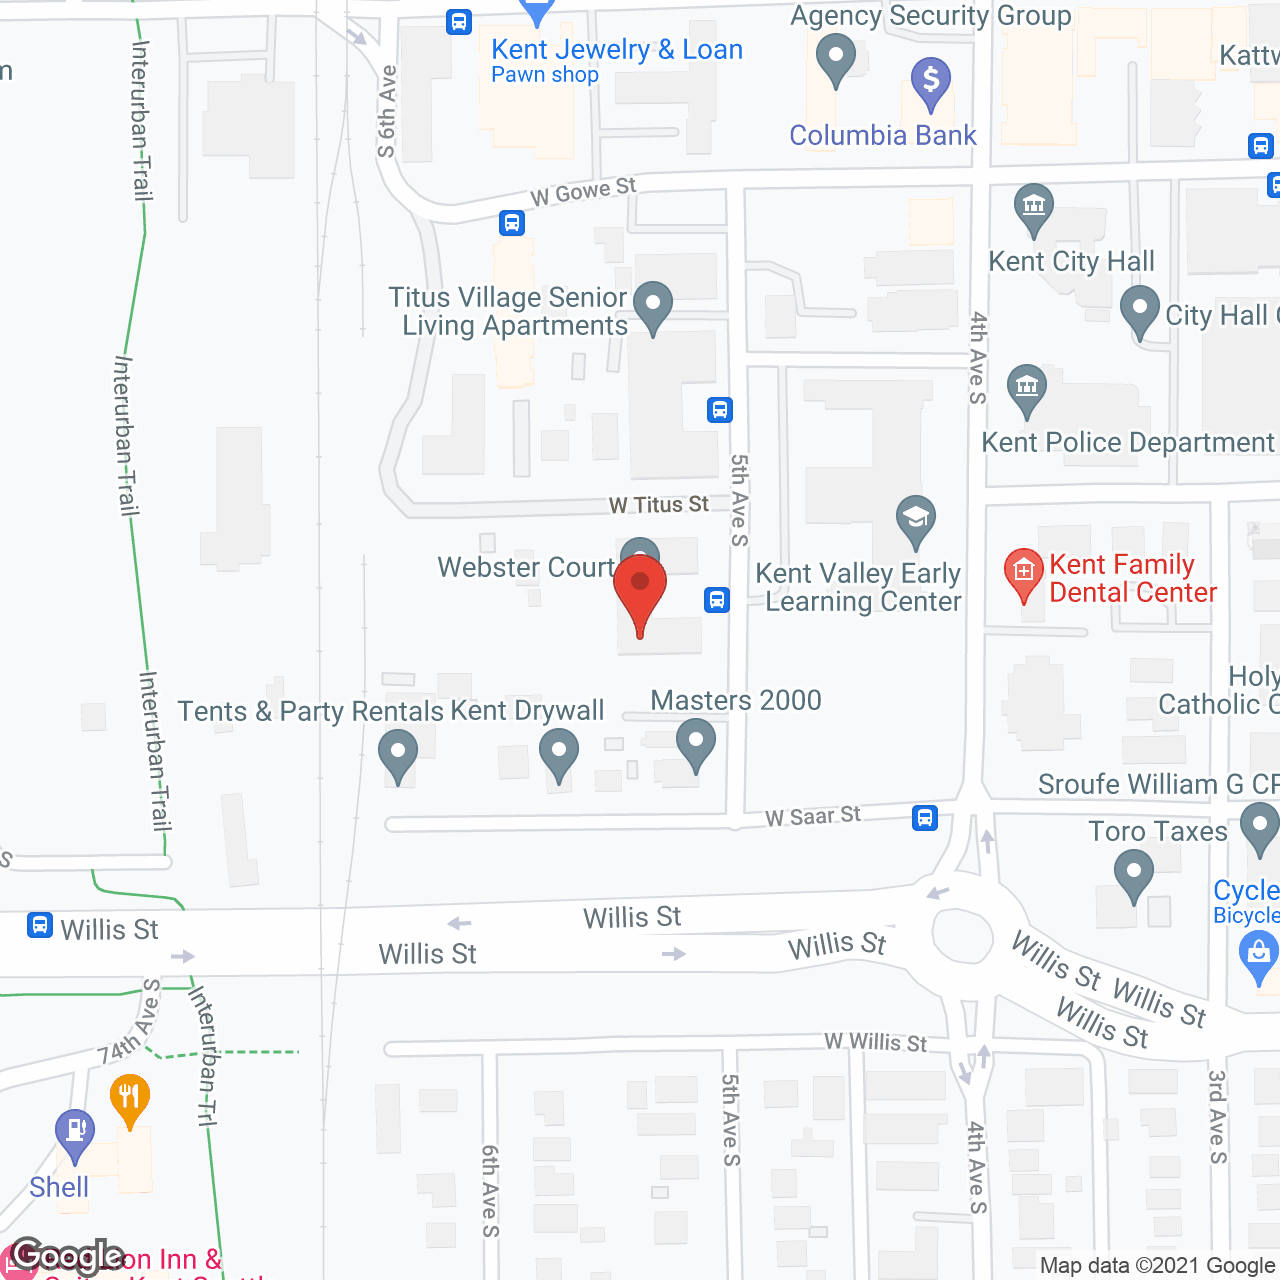 Webster Court in google map